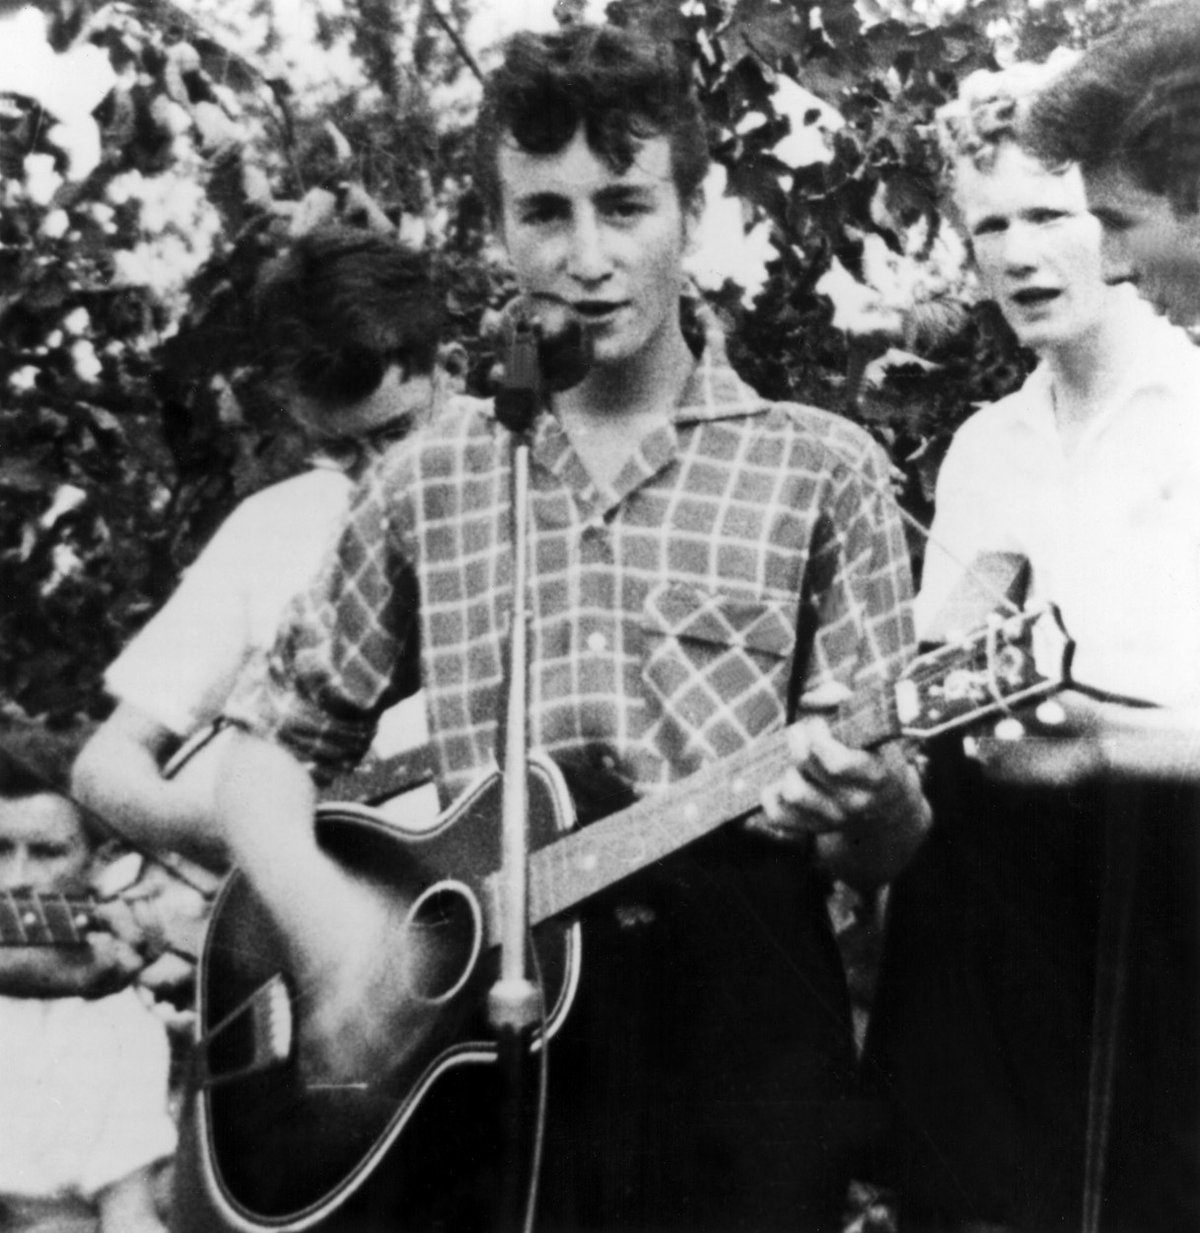 John Lennon v mládí